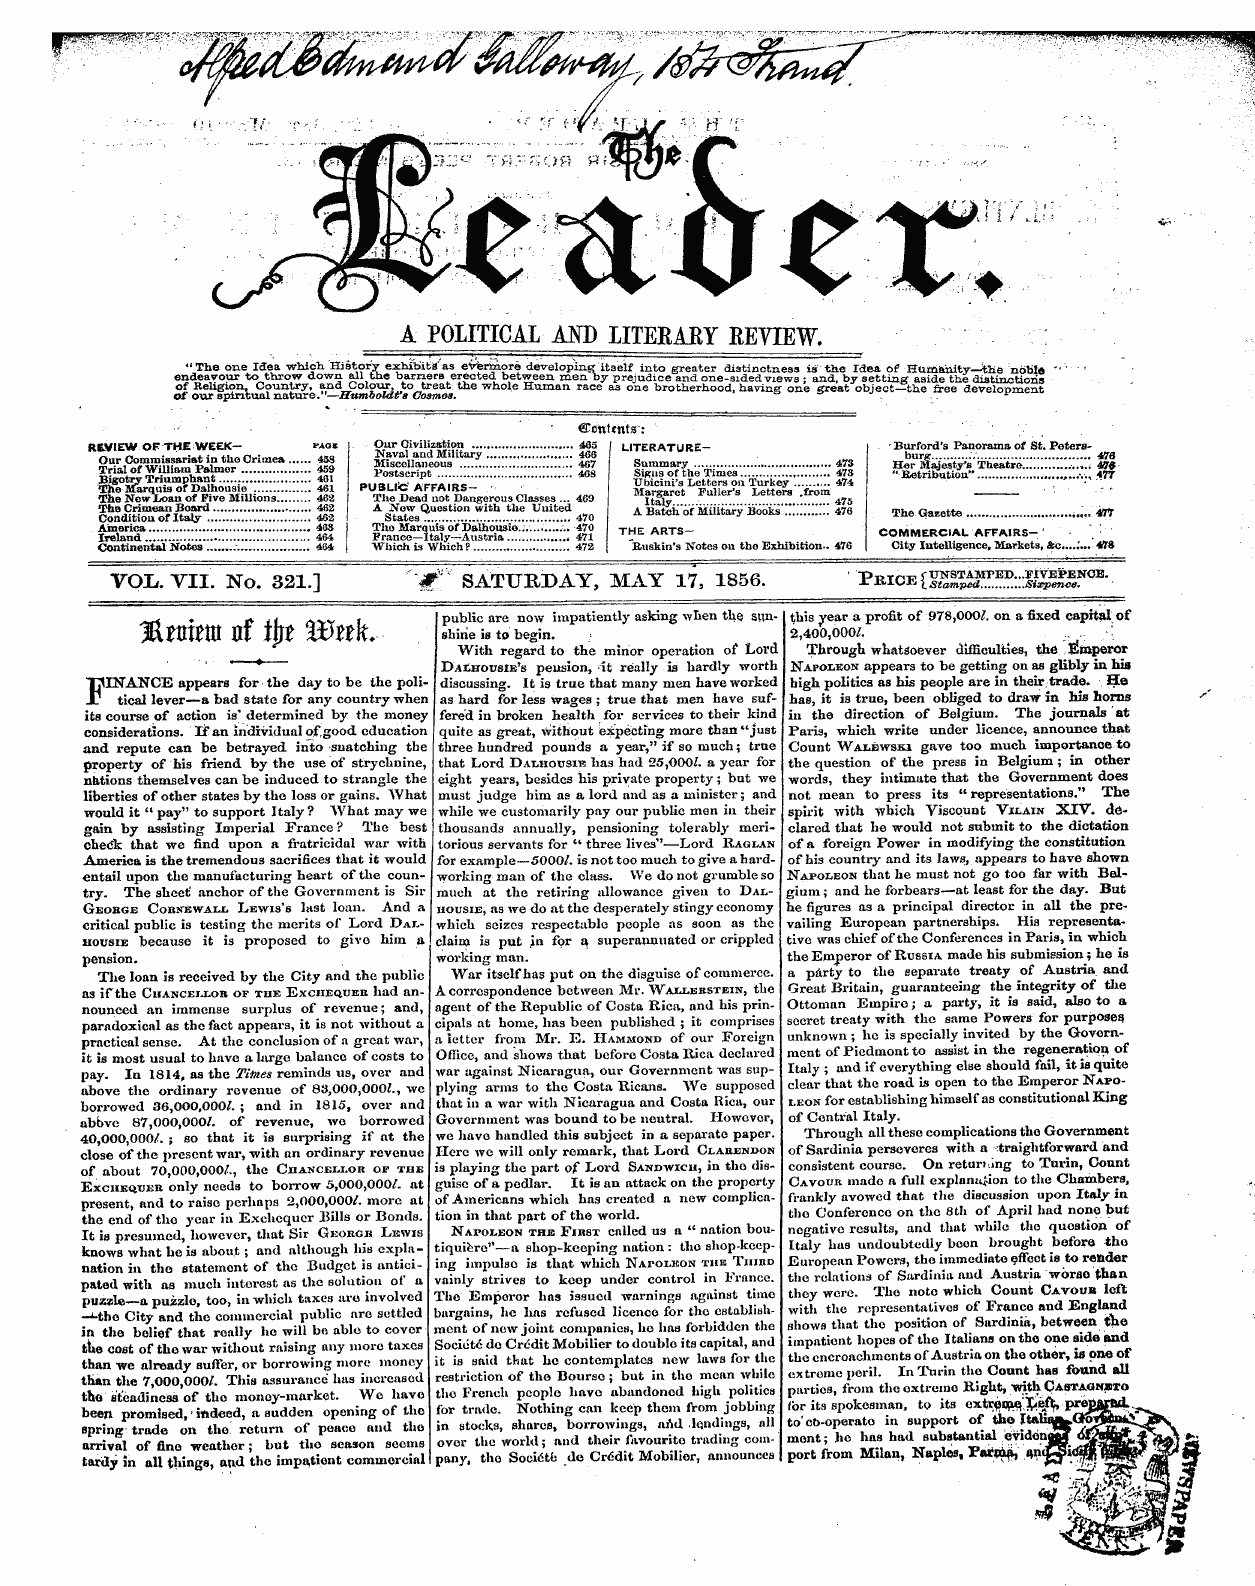 Leader (1850-1860): jS F Y, 1st edition - ¦ ' " ' ' ' Contents: : ¦ " ¦ ' " . 7 ' : ' : ' . ¦ Rimea